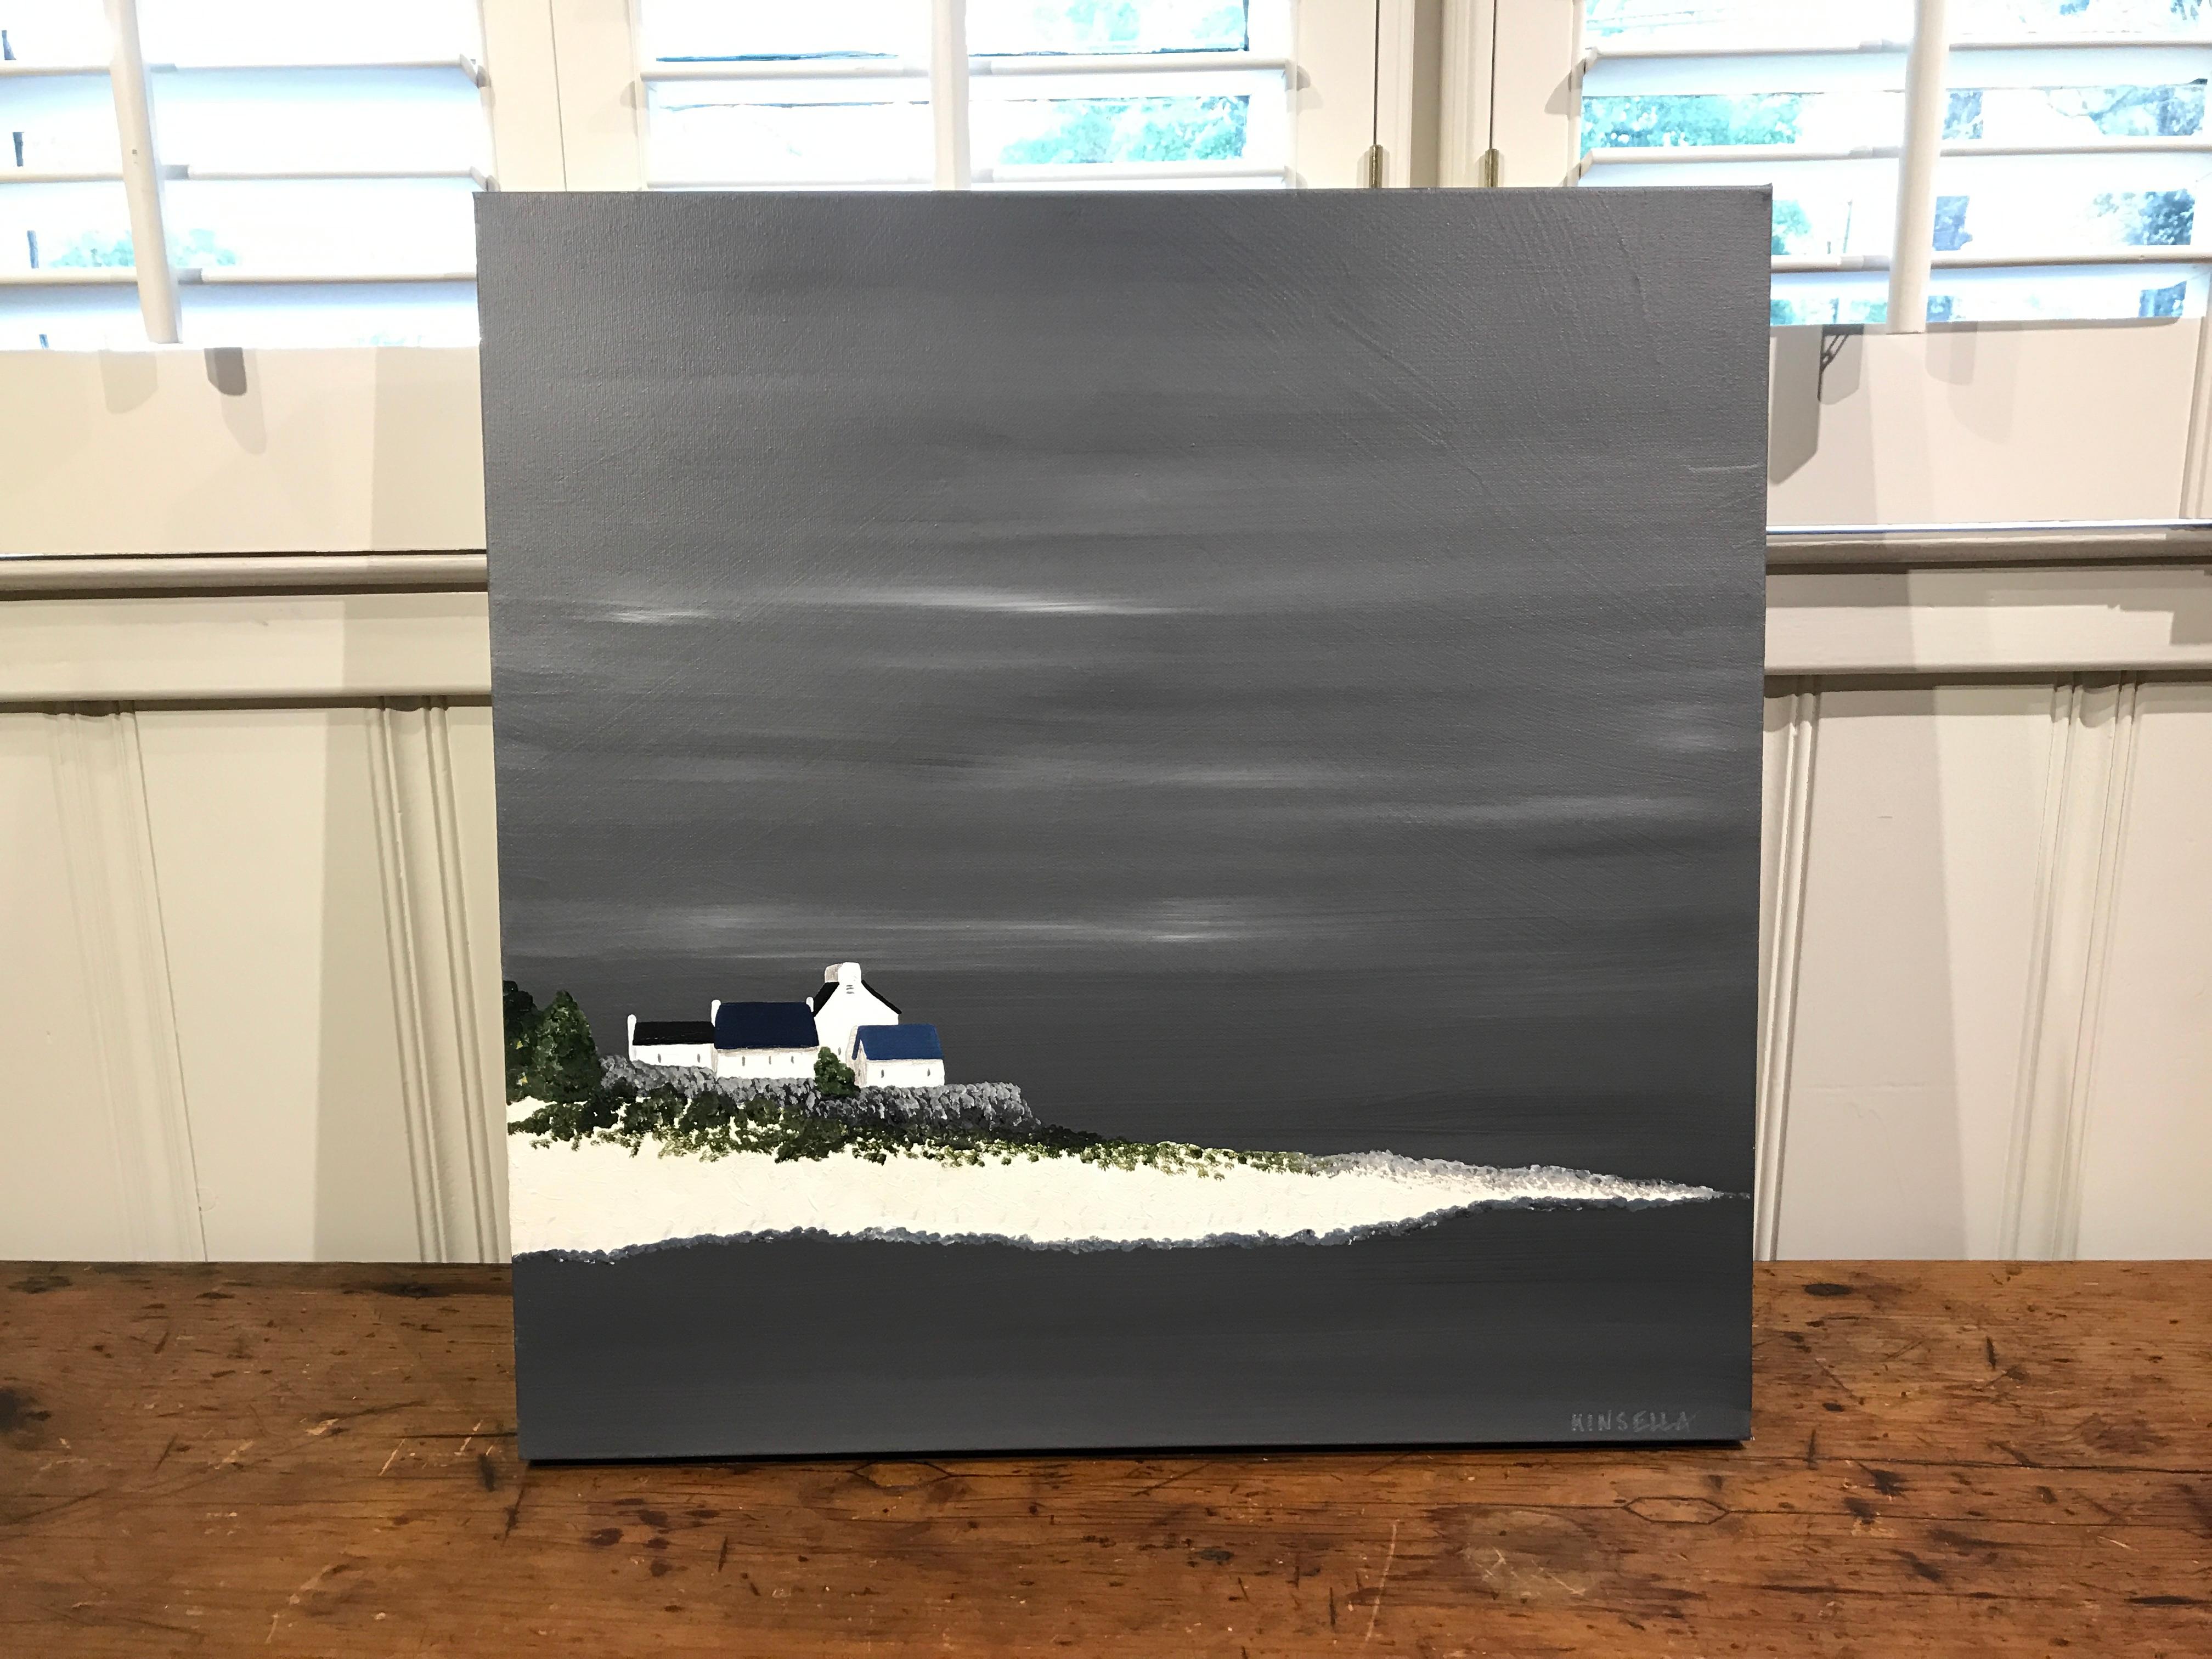 Pleasing Light, Susan Kinsella 2018 Contemporary Square Coastal Painting 2